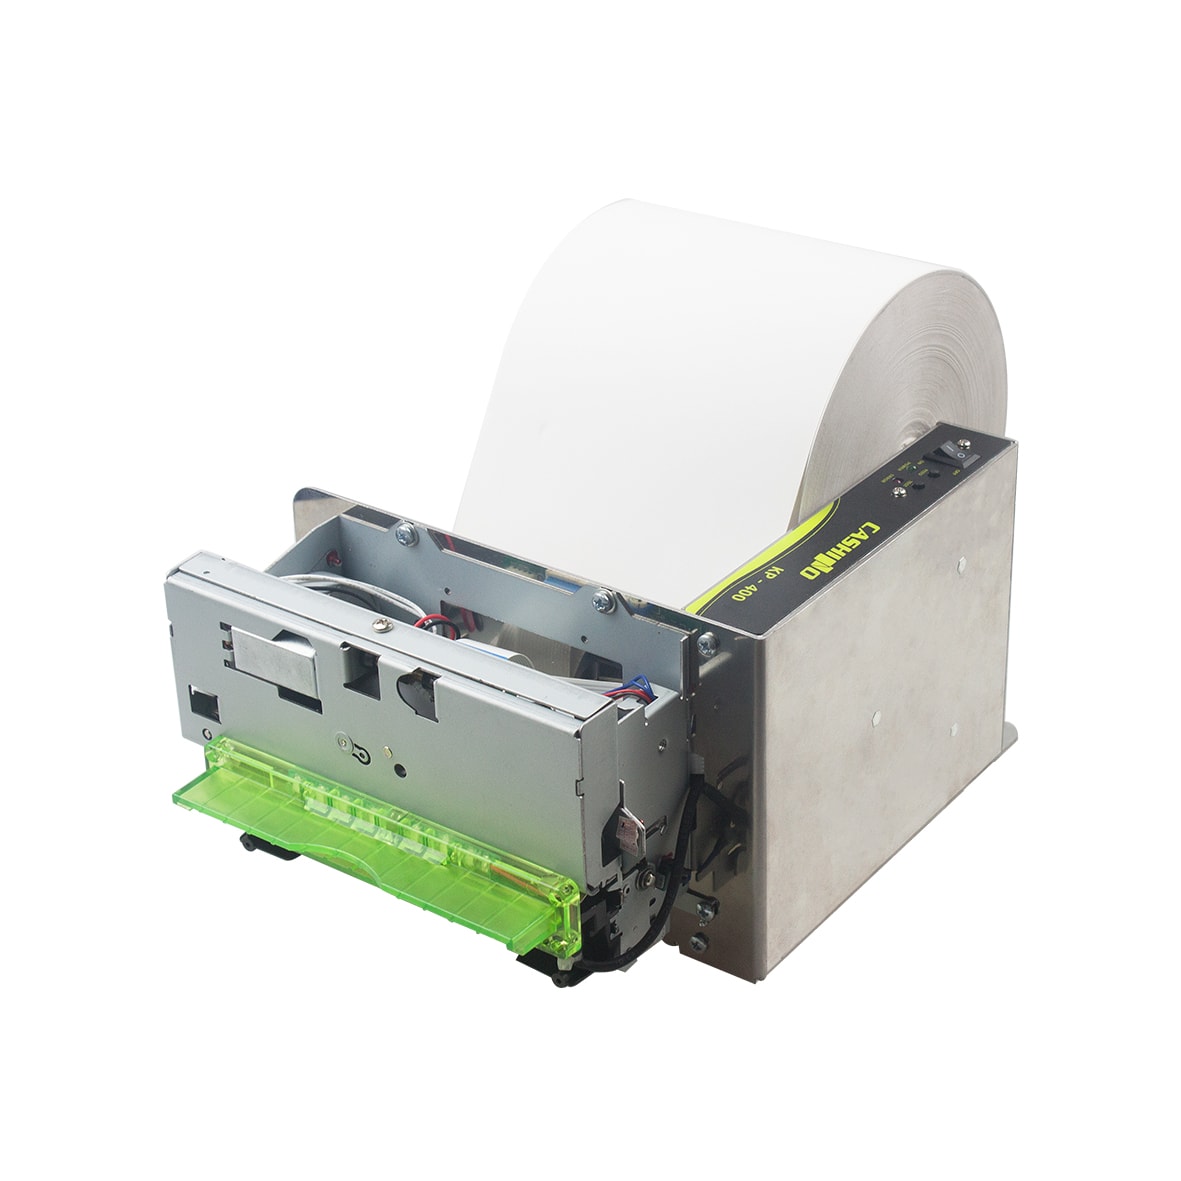 Impressora de quiosque térmica KP-400 de 4 polegadas
